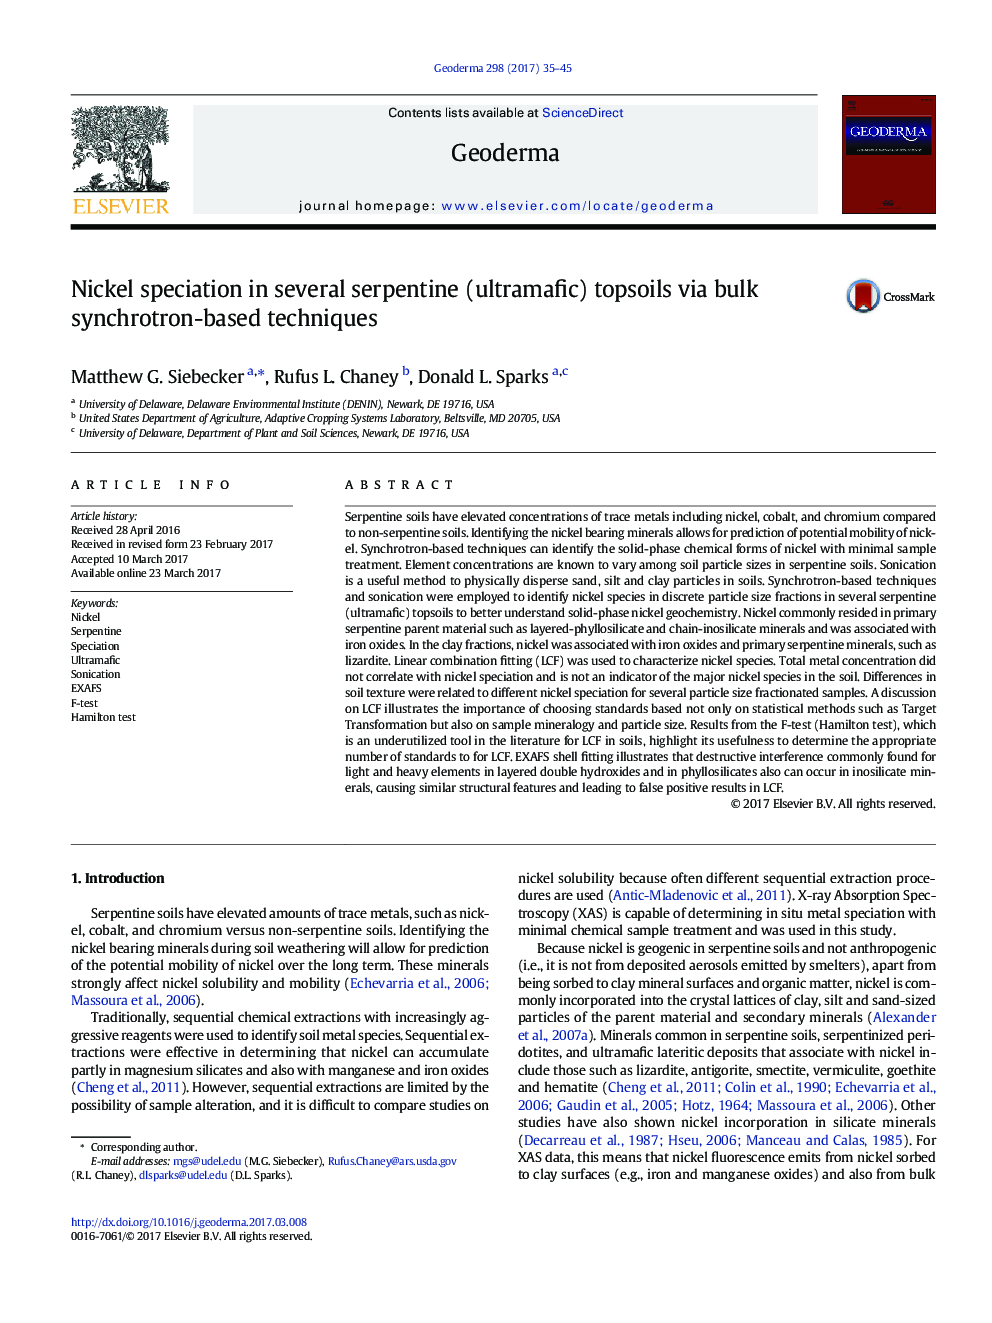 Nickel speciation in several serpentine (ultramafic) topsoils via bulk synchrotron-based techniques